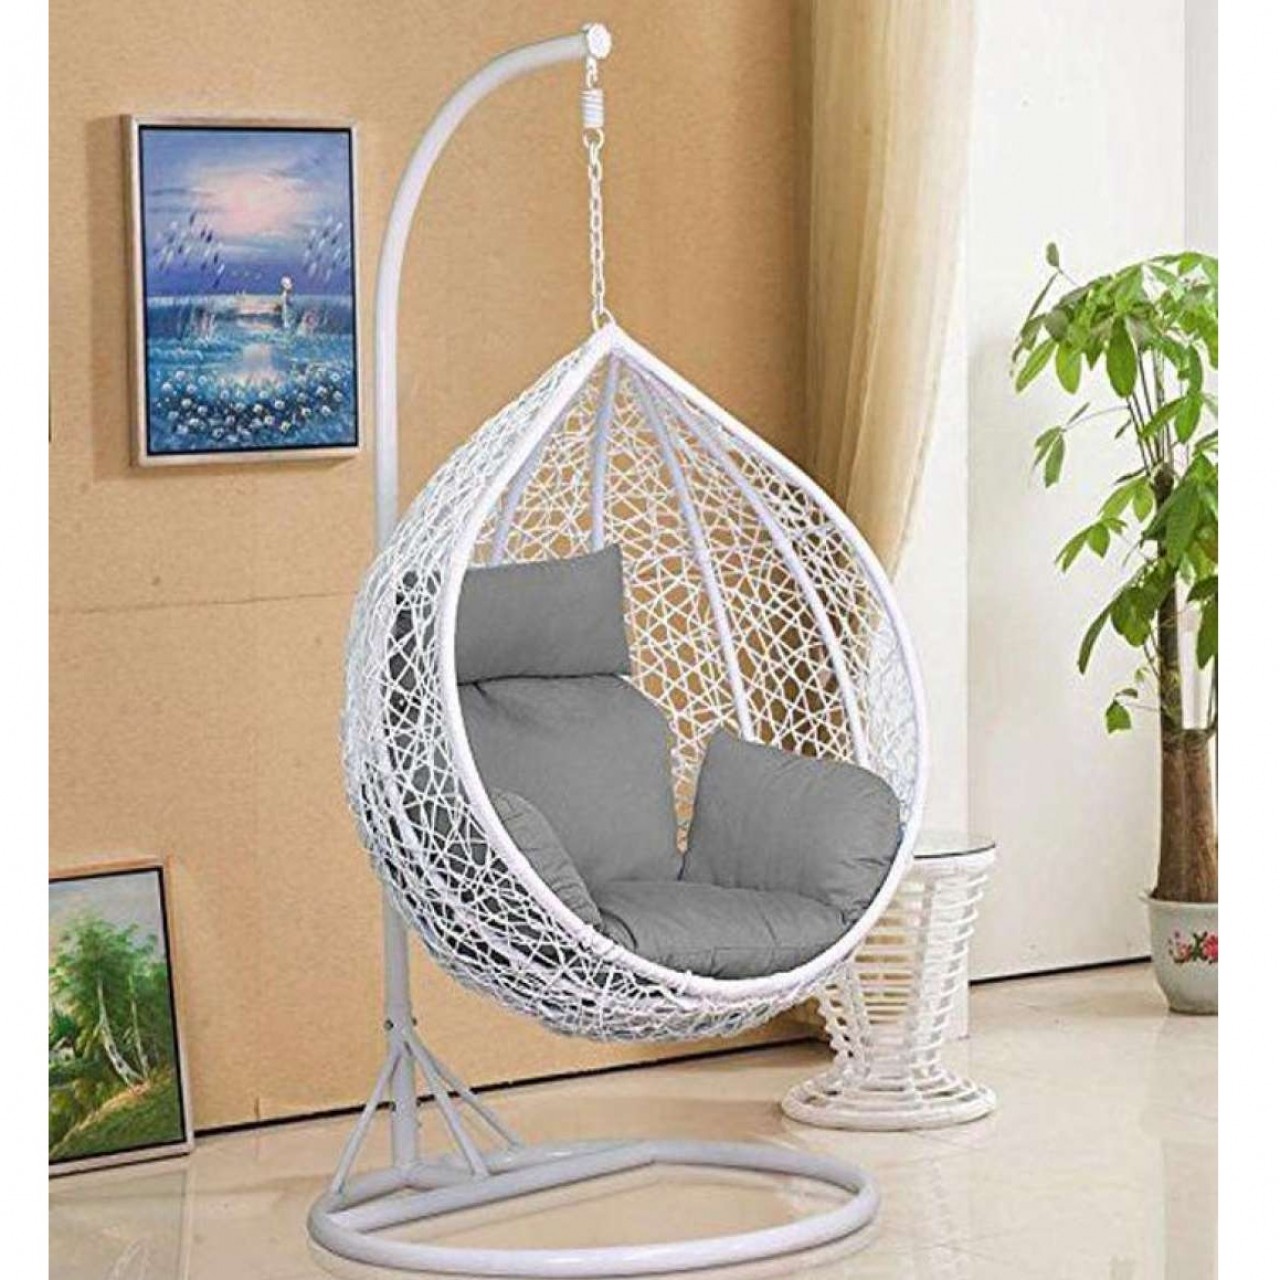 Egg Shape Hanging Swing Chair Jhoola, Hanging Swing Chair Outdoor Wicker